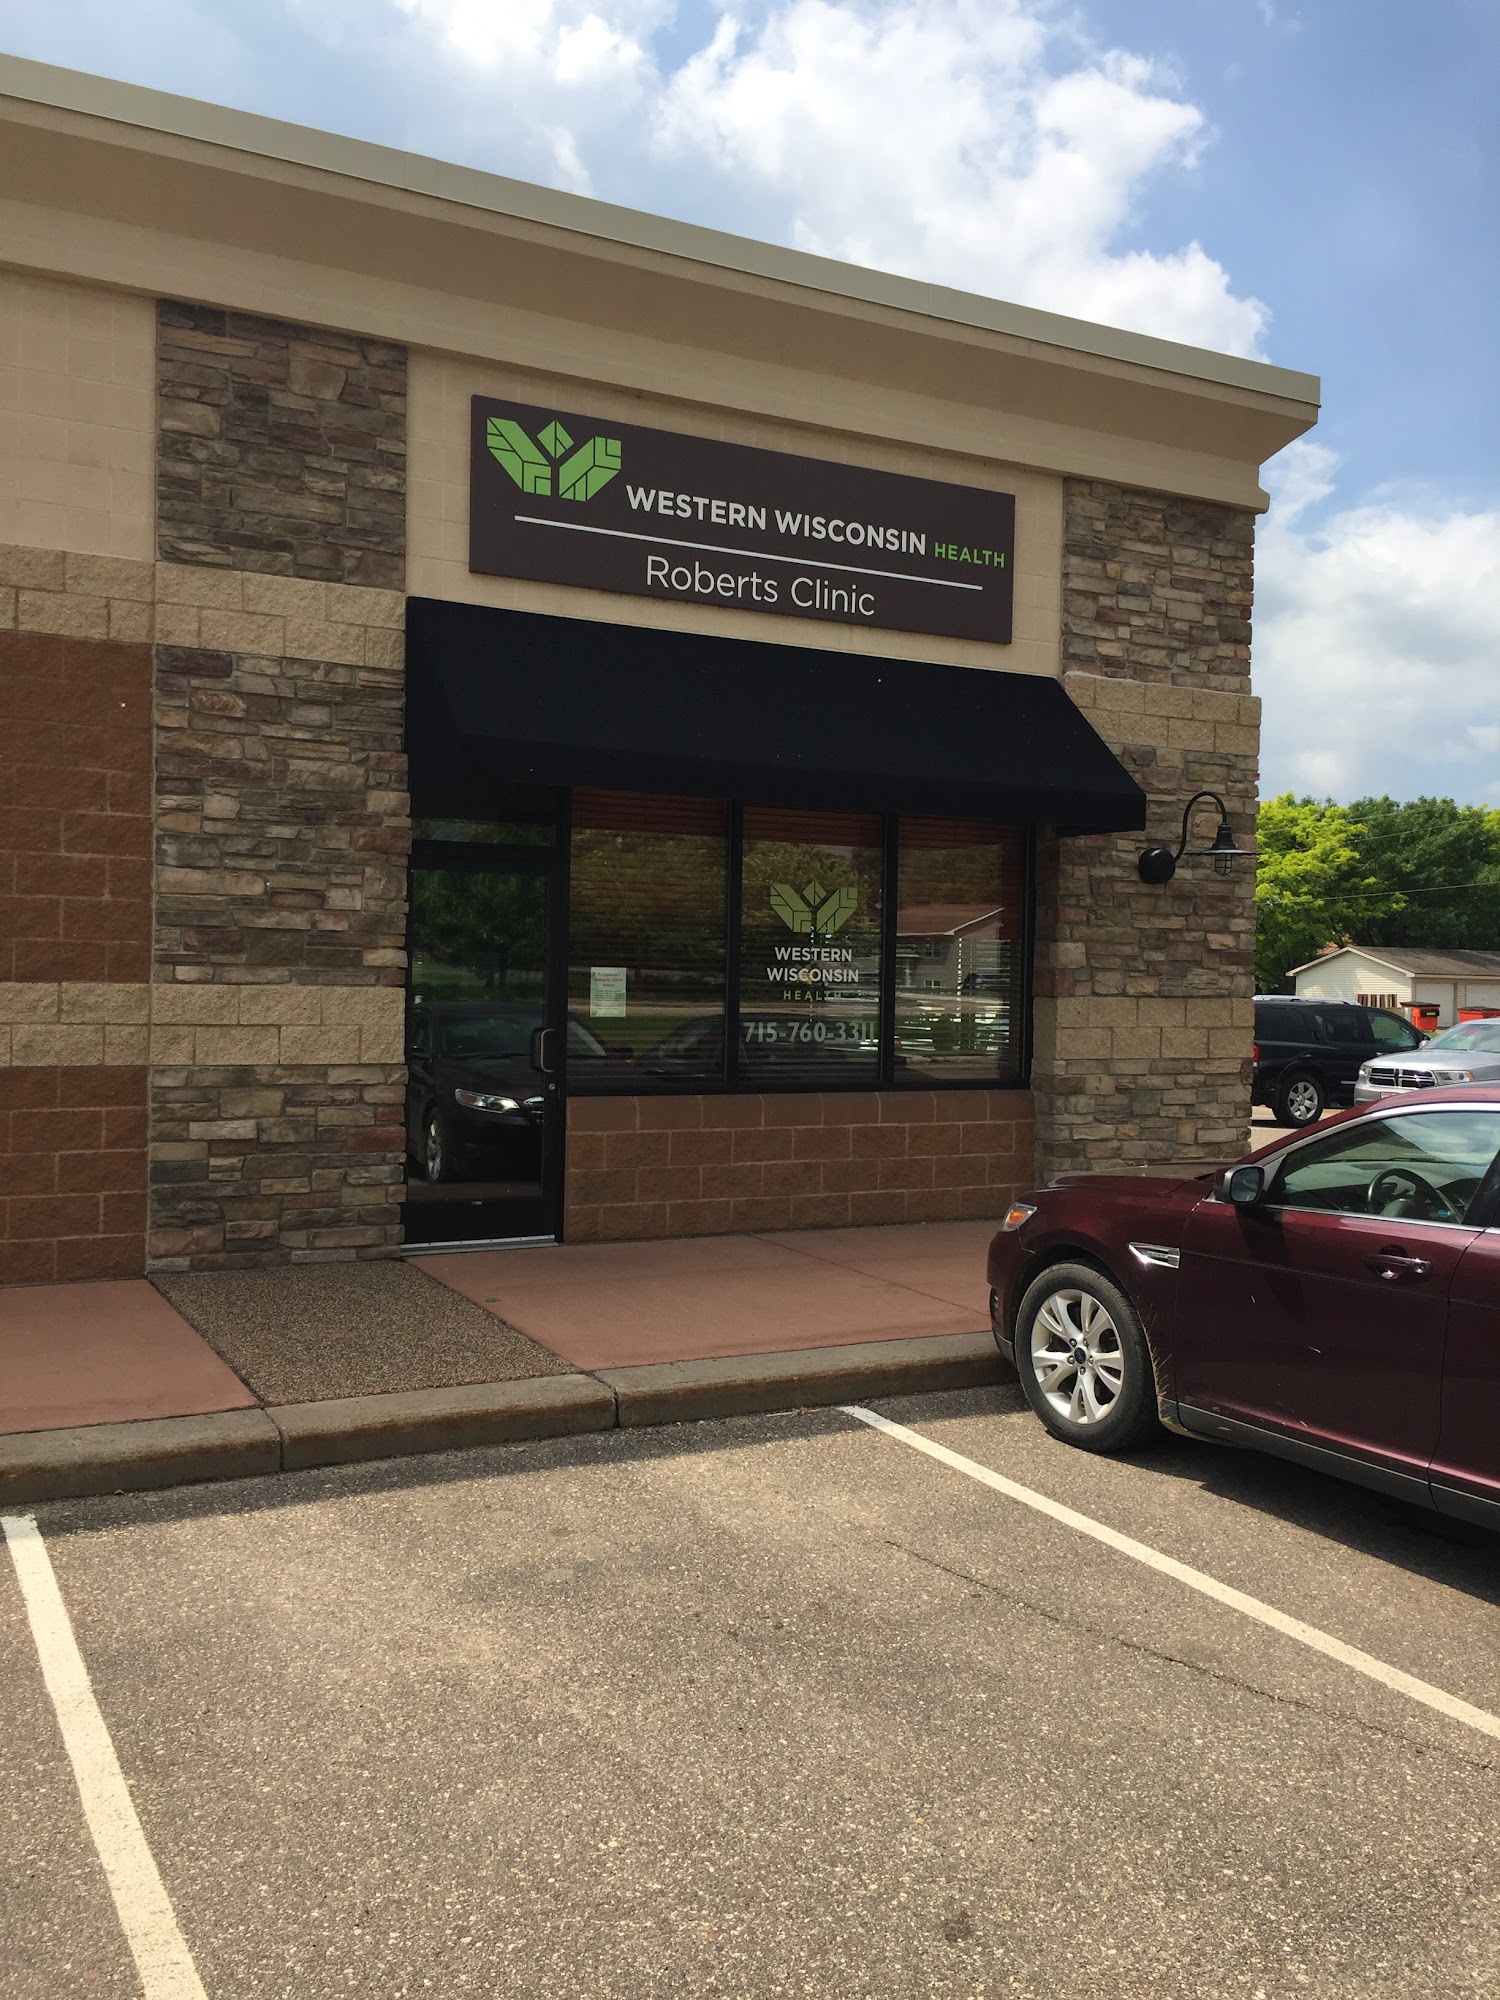 Western Wisconsin Health Roberts Clinic